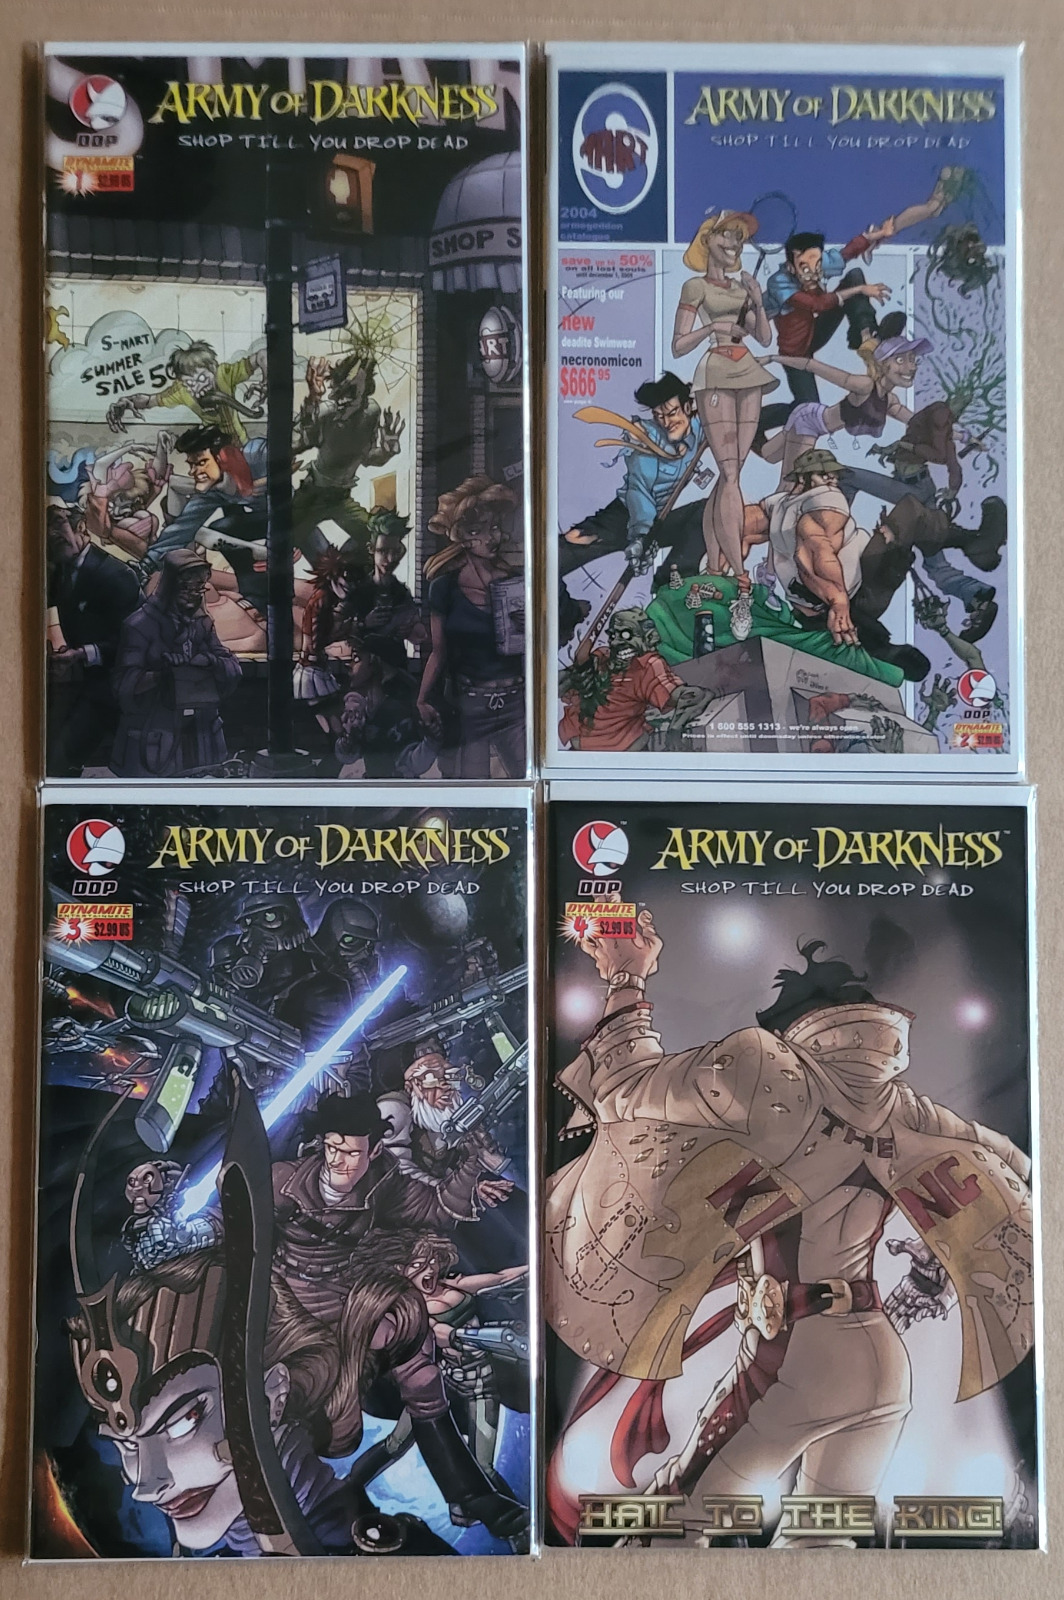 Army of Darkness Shop Till You Drop Dead 1-4 complete Dynamite Comics Evil Dead